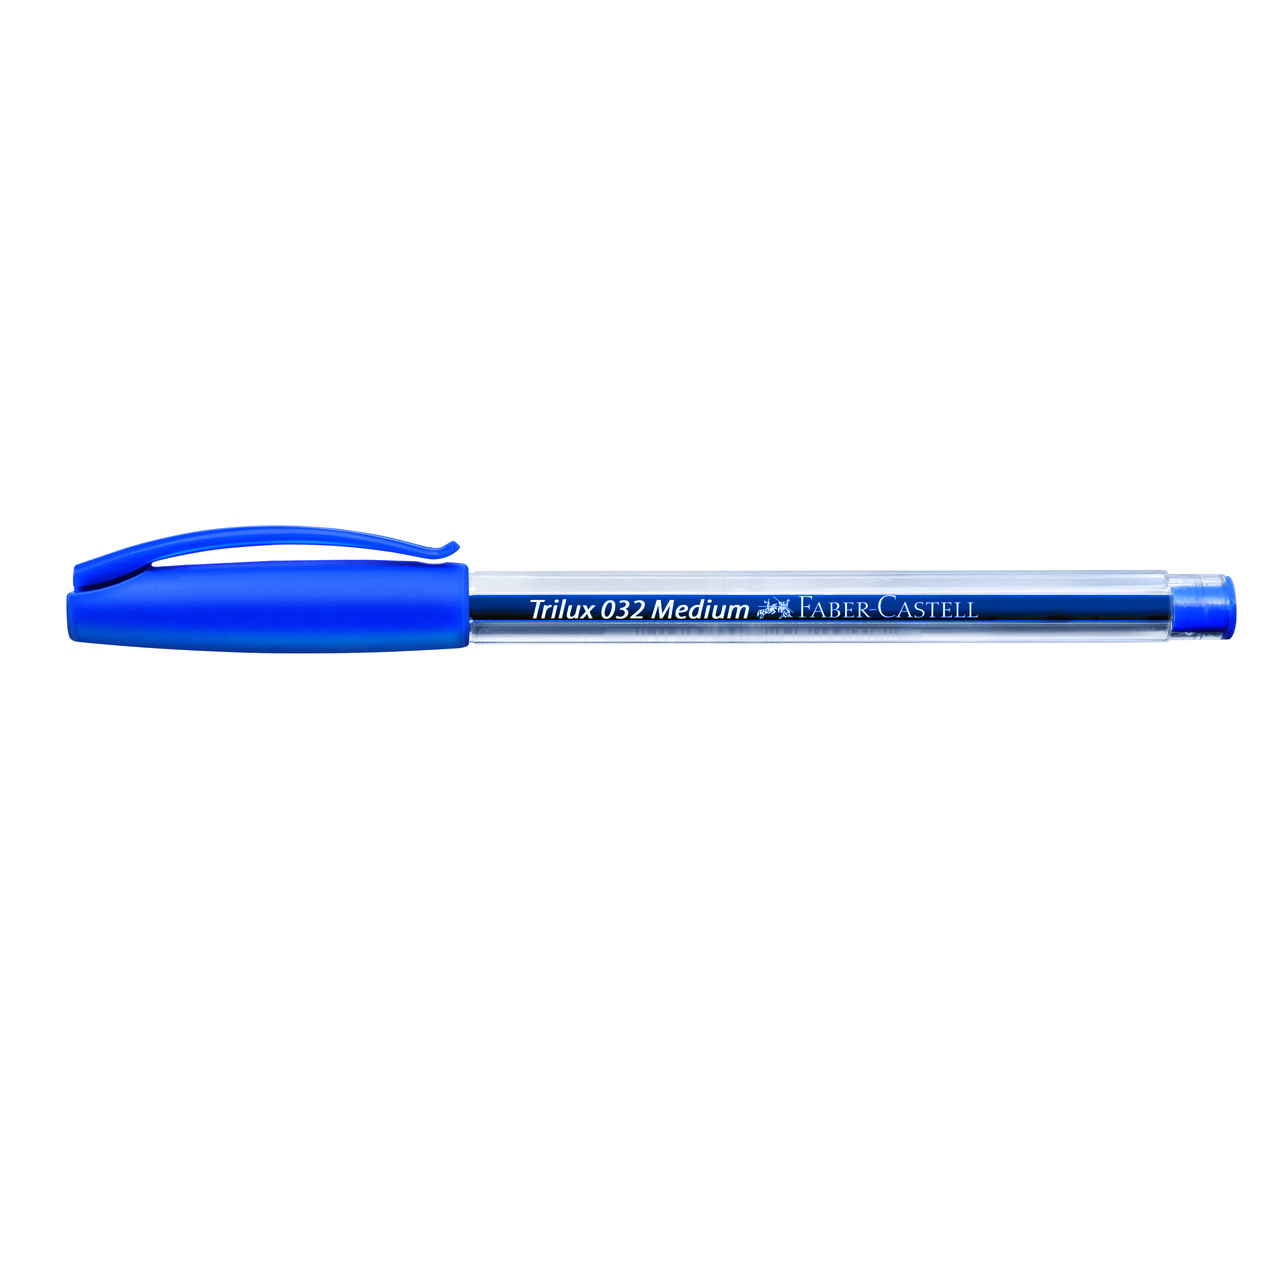 Caneta esferográfica 1.0 azul TRILUX Faber-Castell